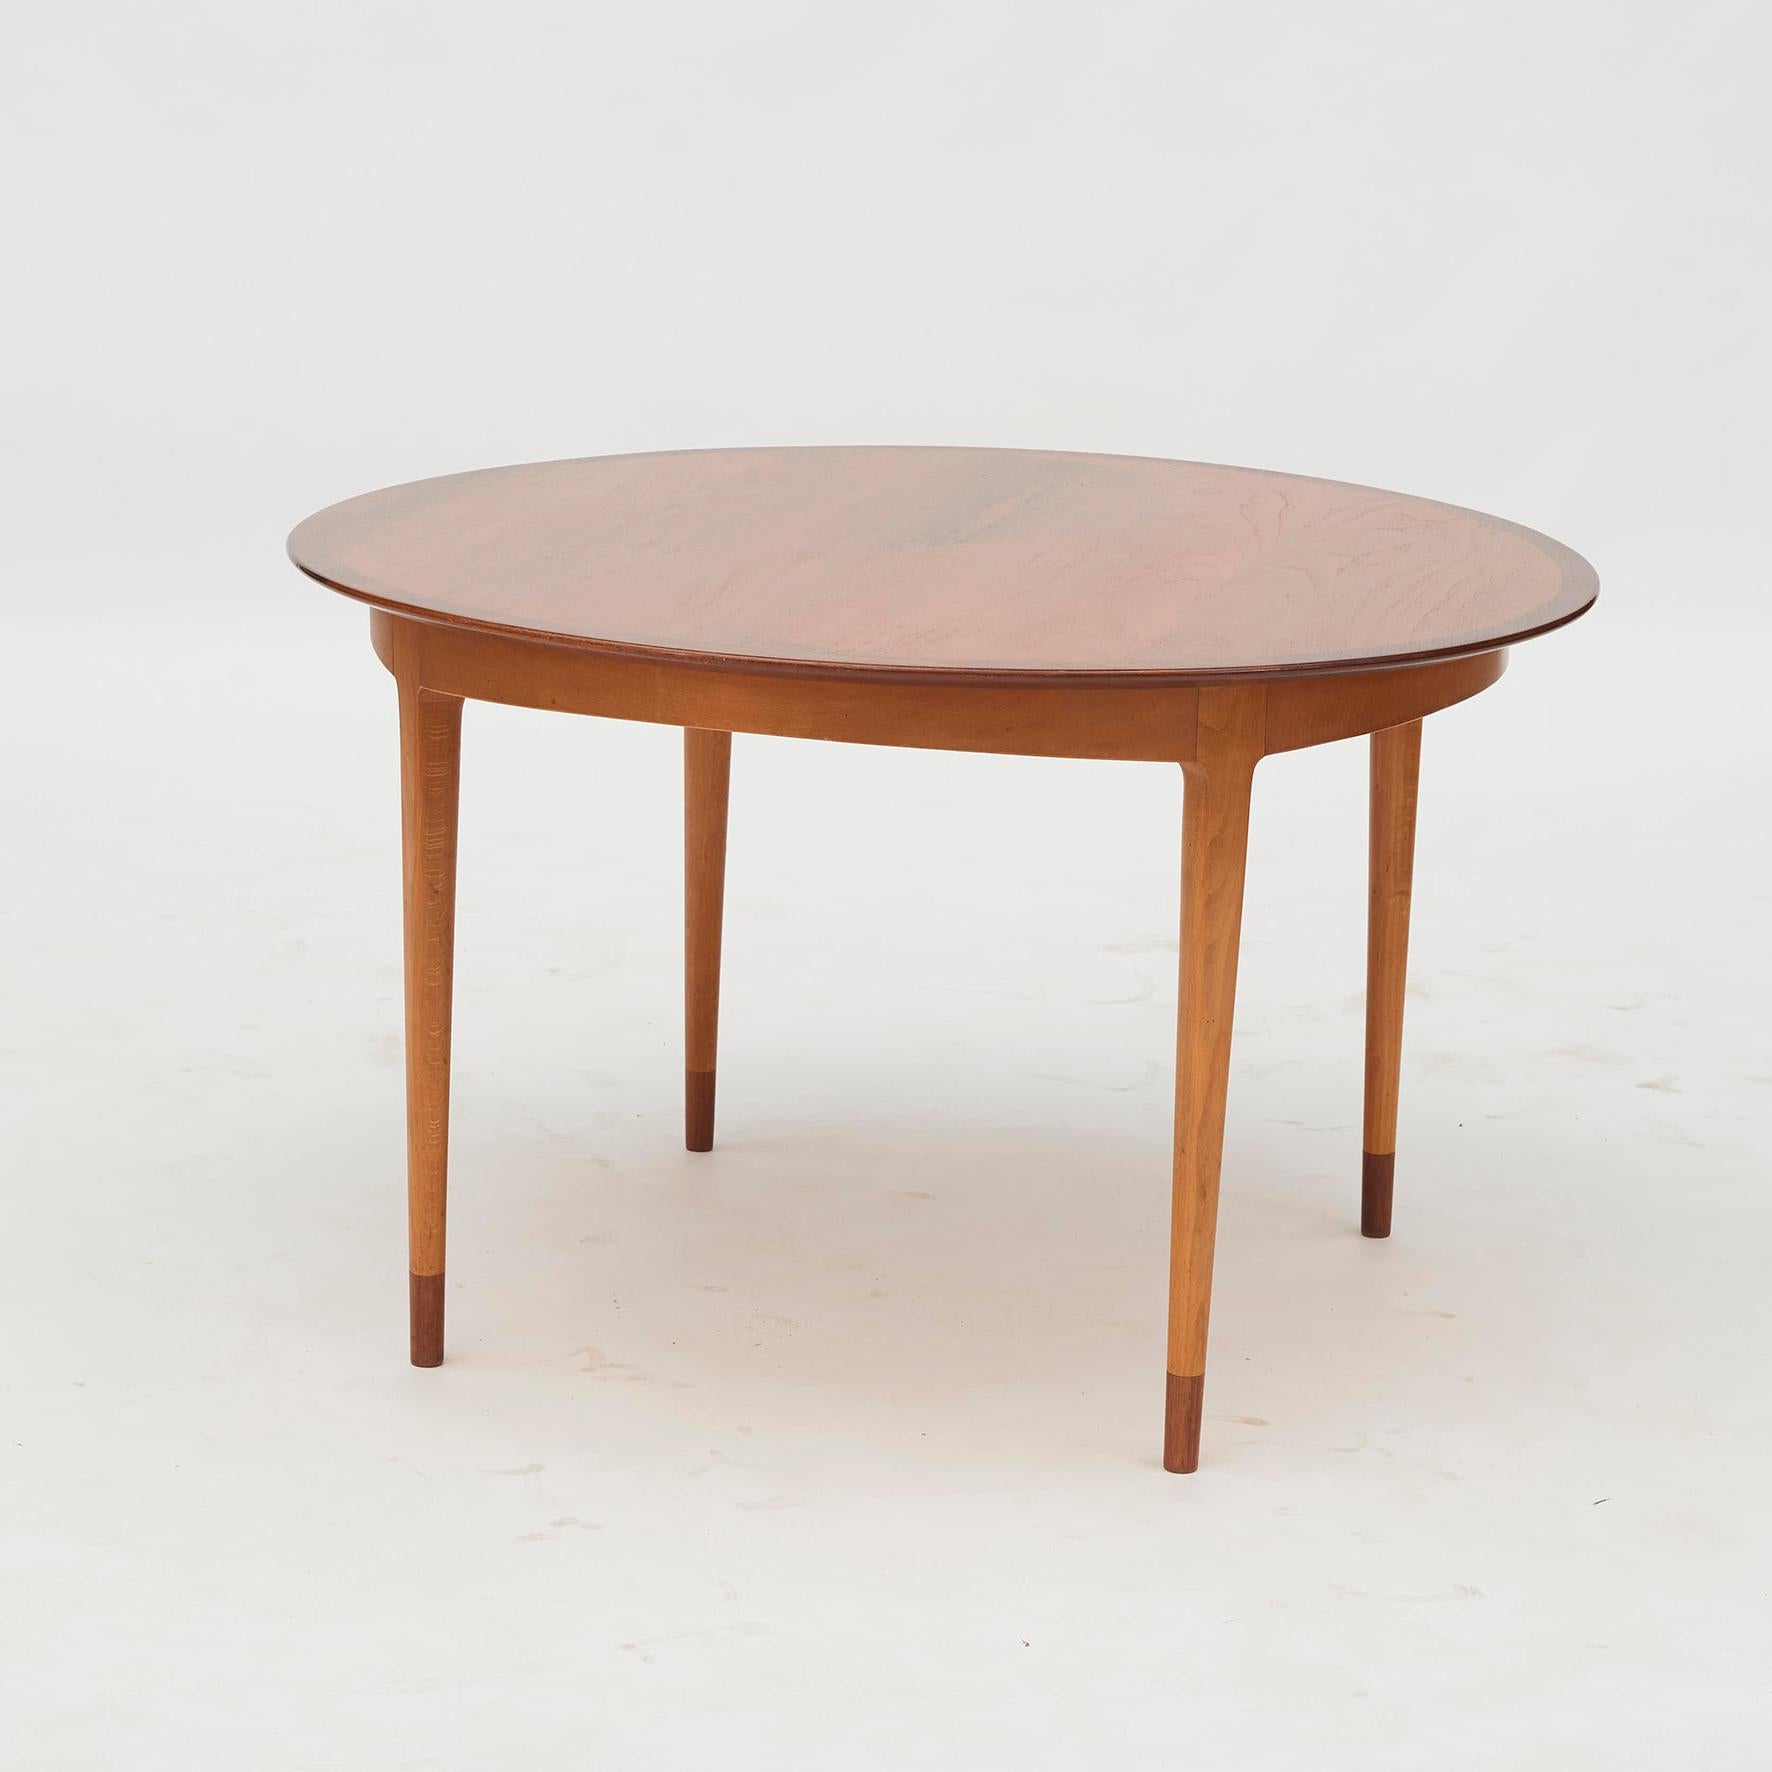 Unique coffee table, Danish design, 1950-1955. Tabletop with veneered Yin-Yang symbol in teak, walnut and rosewood. Table legs in beechwood.